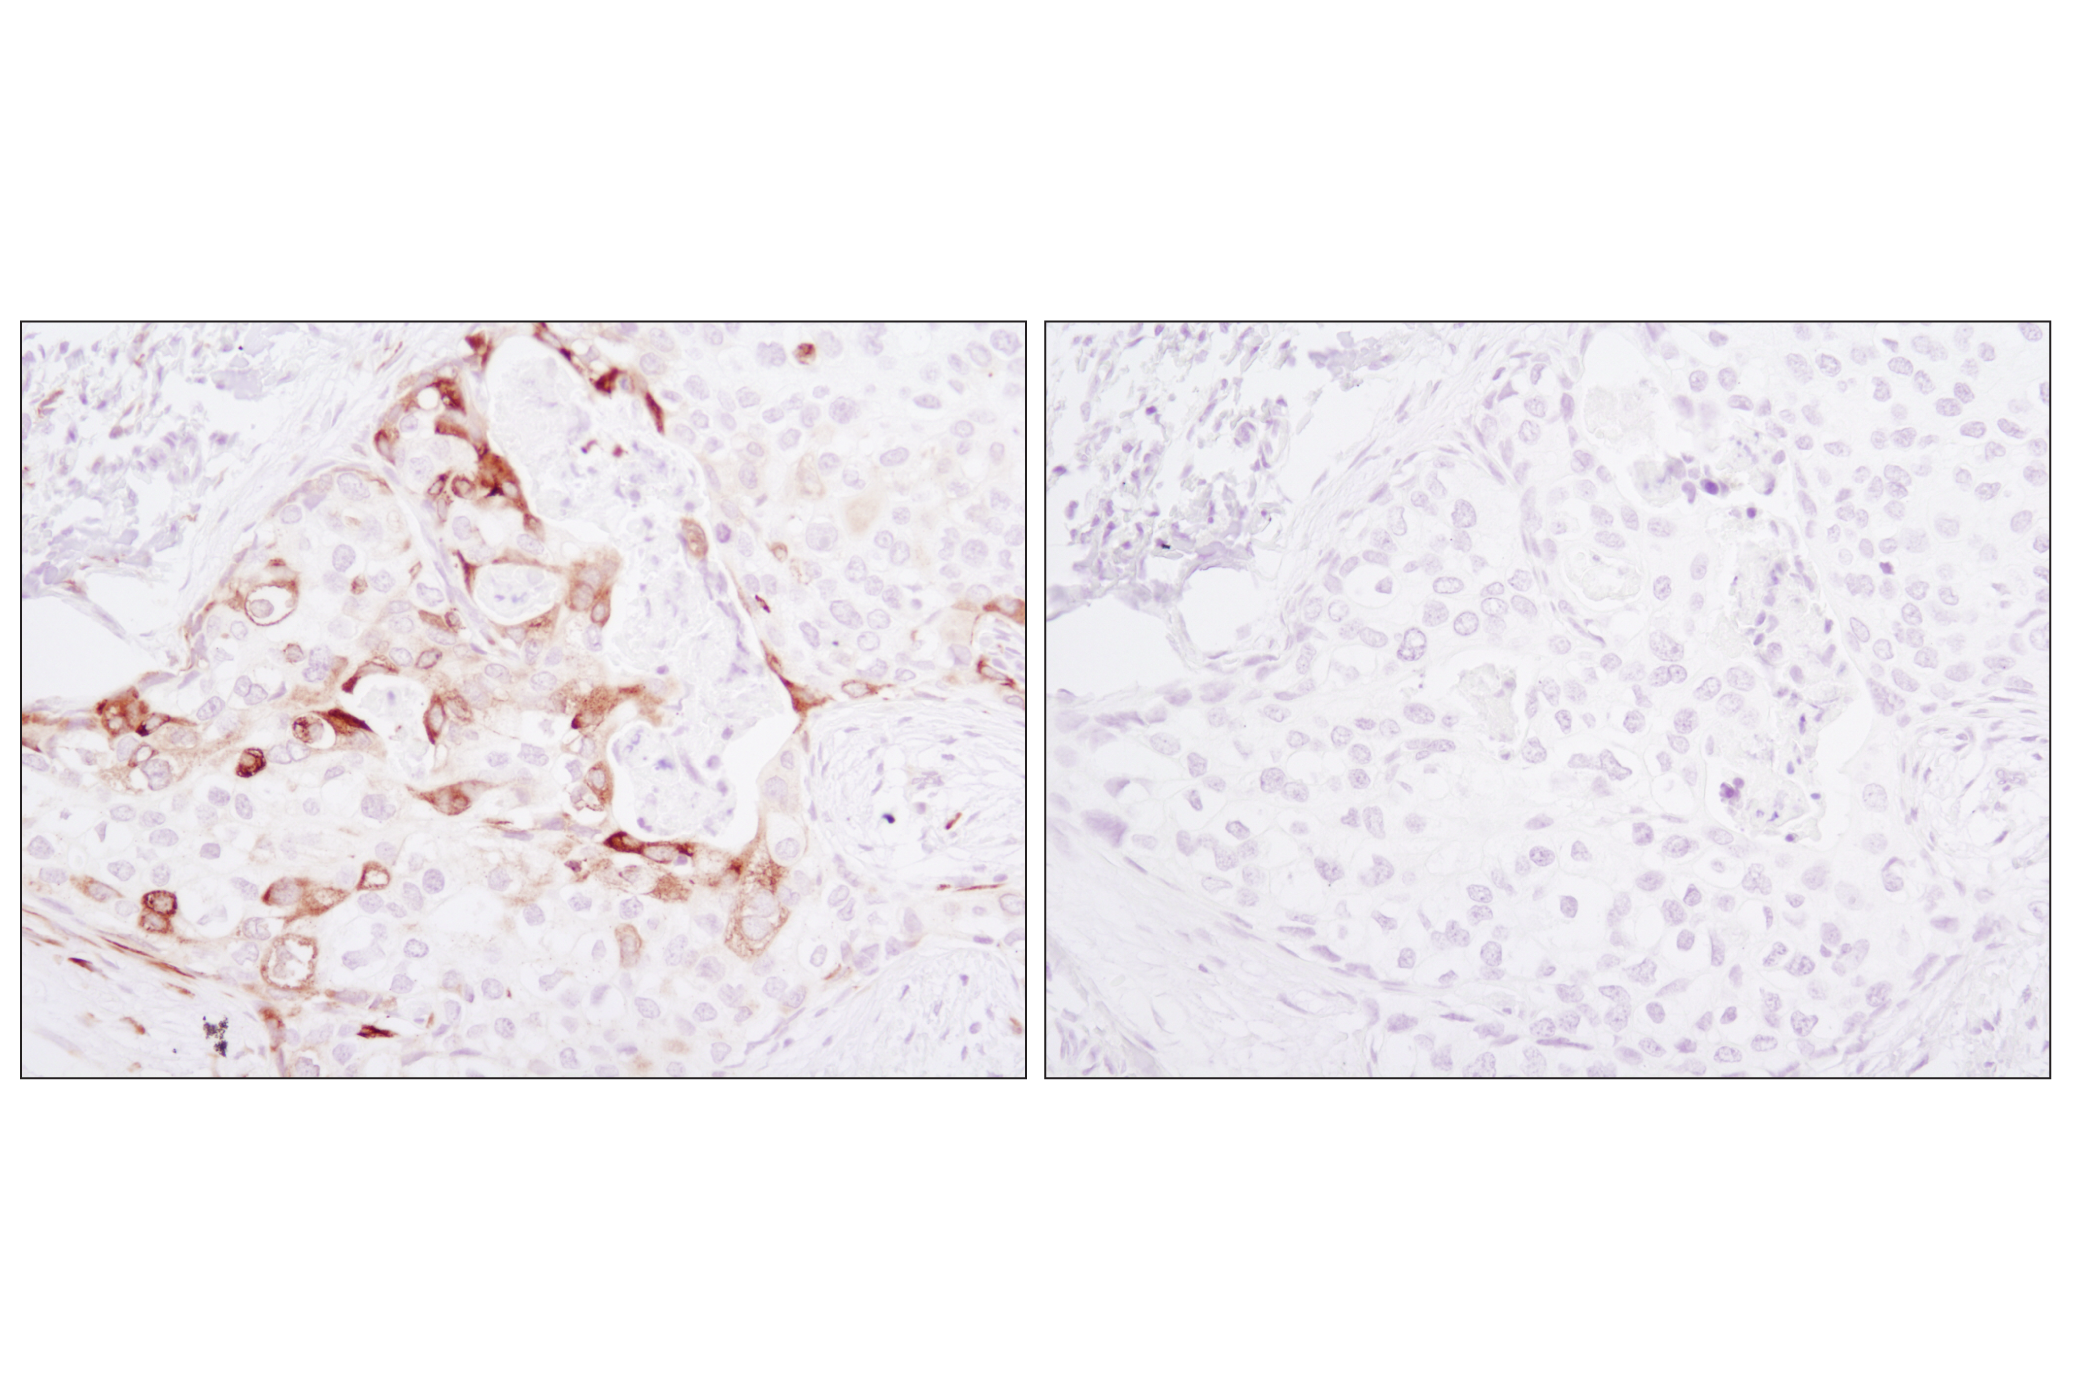  Image 17: PhosphoPlus® S6 Ribosomal Protein (Ser235/Ser236) Antibody Duet